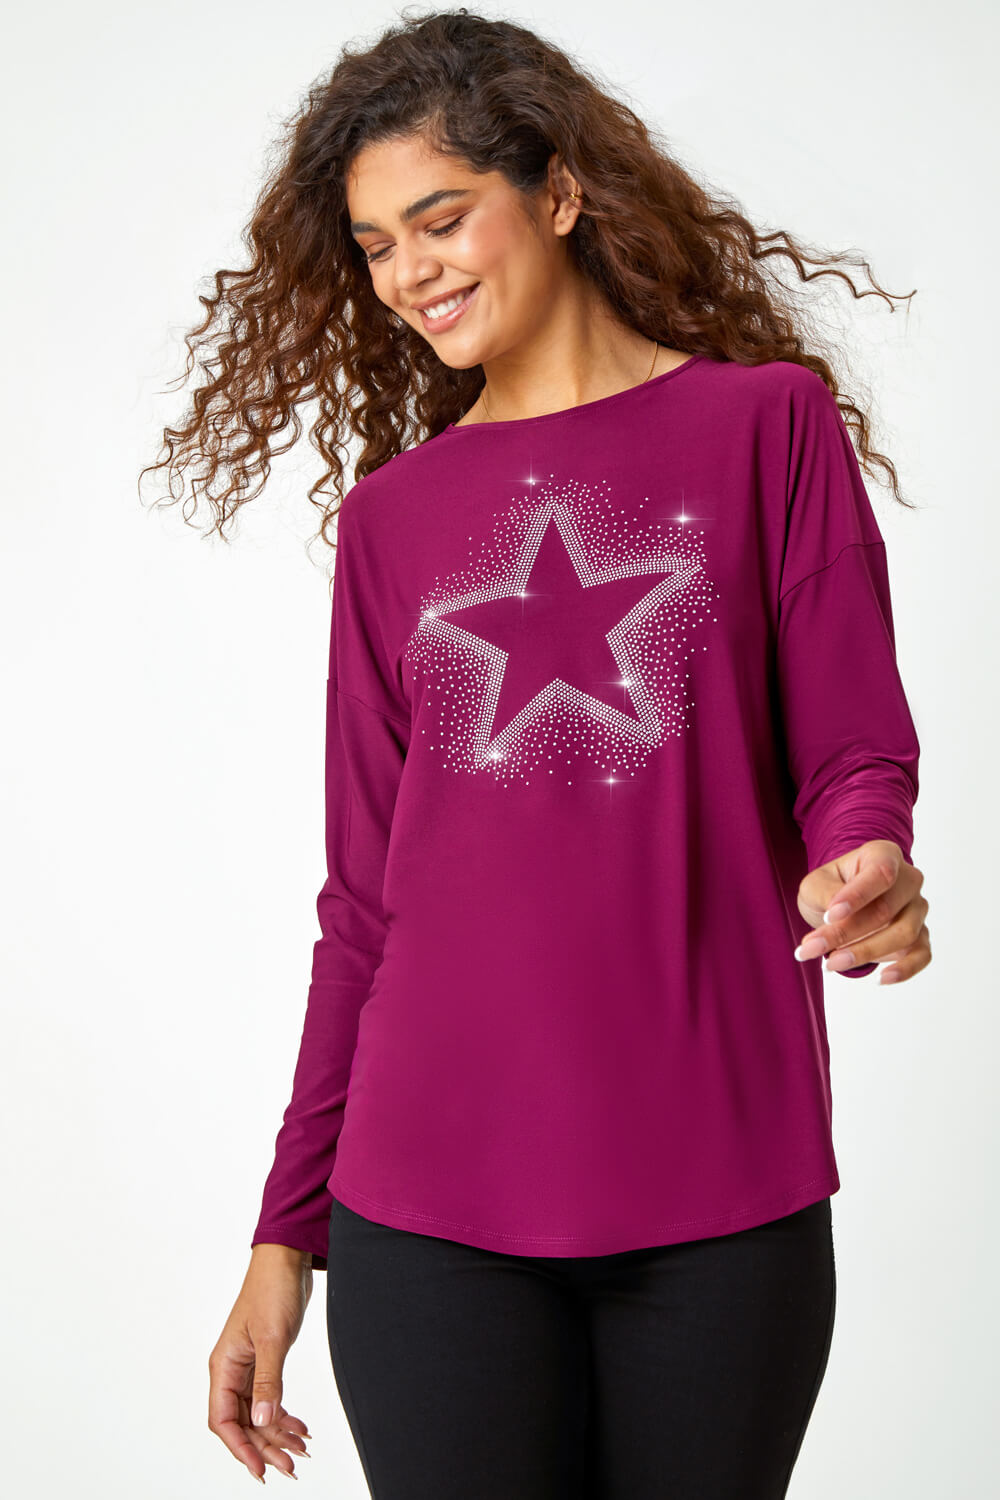 MAGENTA Embellished Star Print Stretch Top, Image 4 of 5